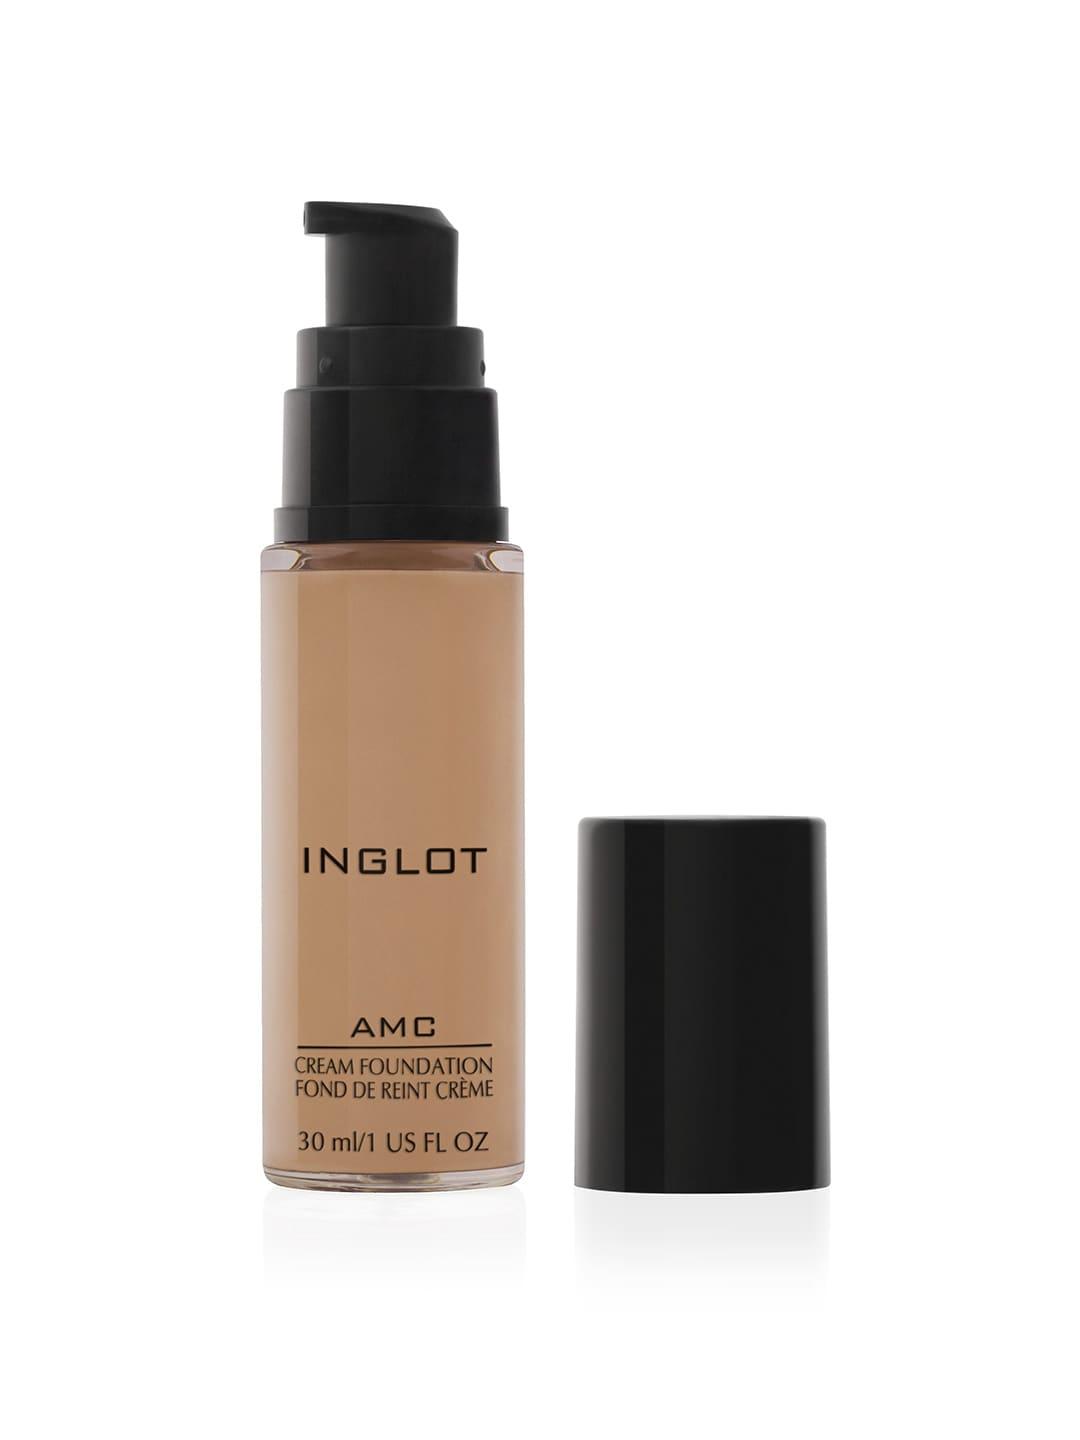 inglot amc cream foundation 30ml - nude lw 600